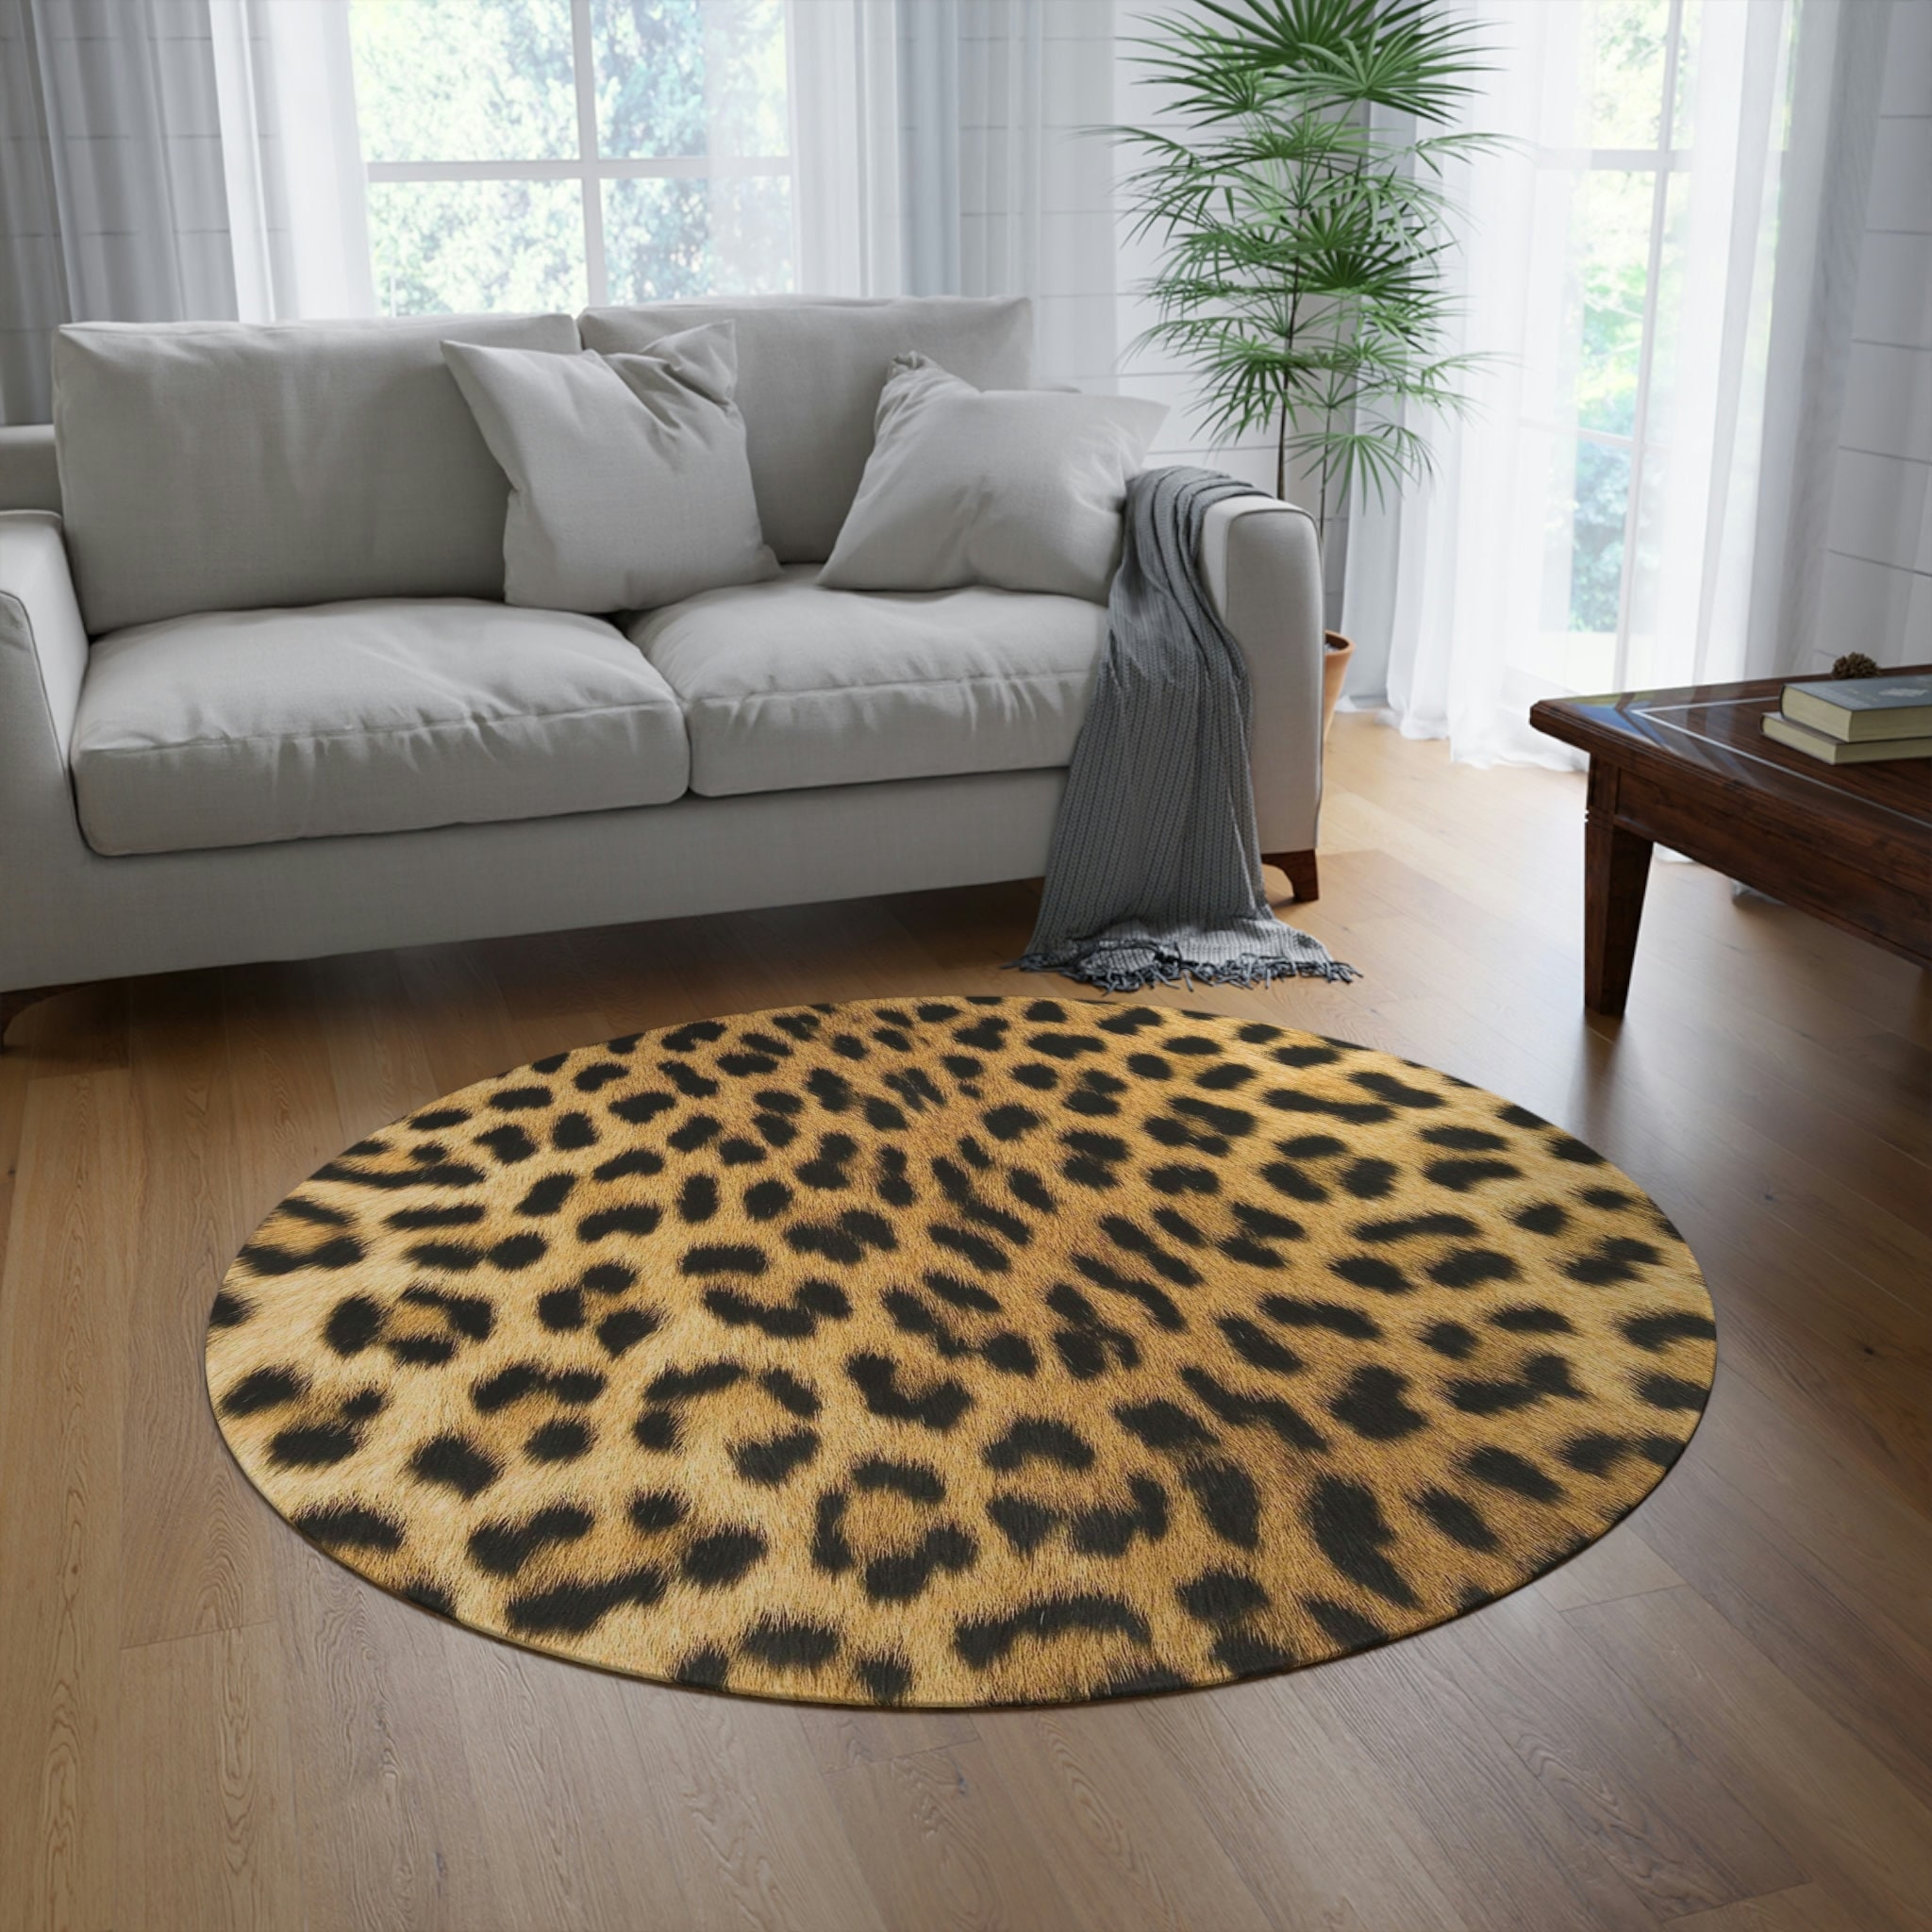 Leopard Print Round Rug, Animal Print Rug, Safari Nursery Decor